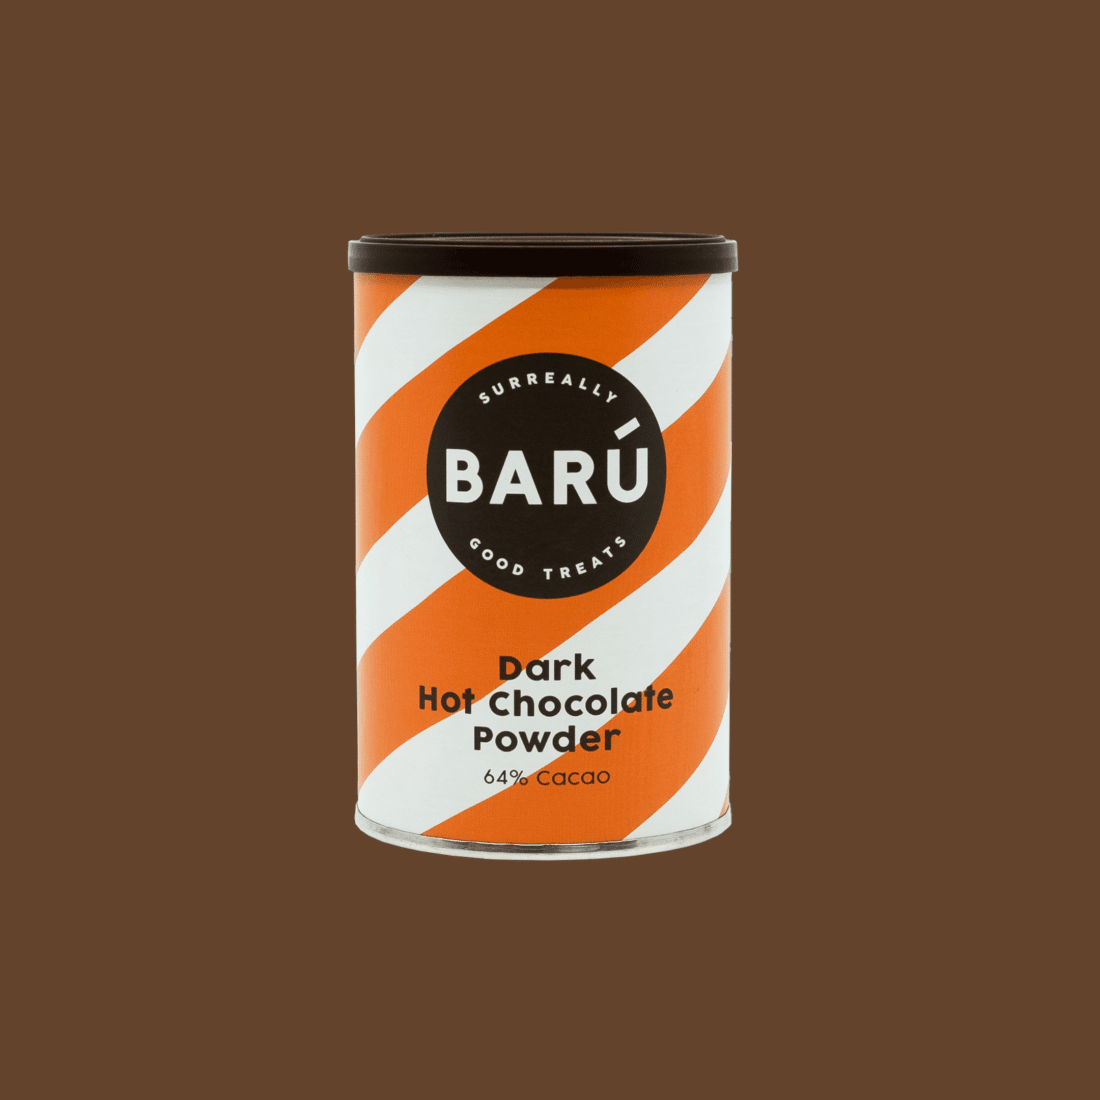 Dark Hot Chocolate Powder Barú 64% cocoa